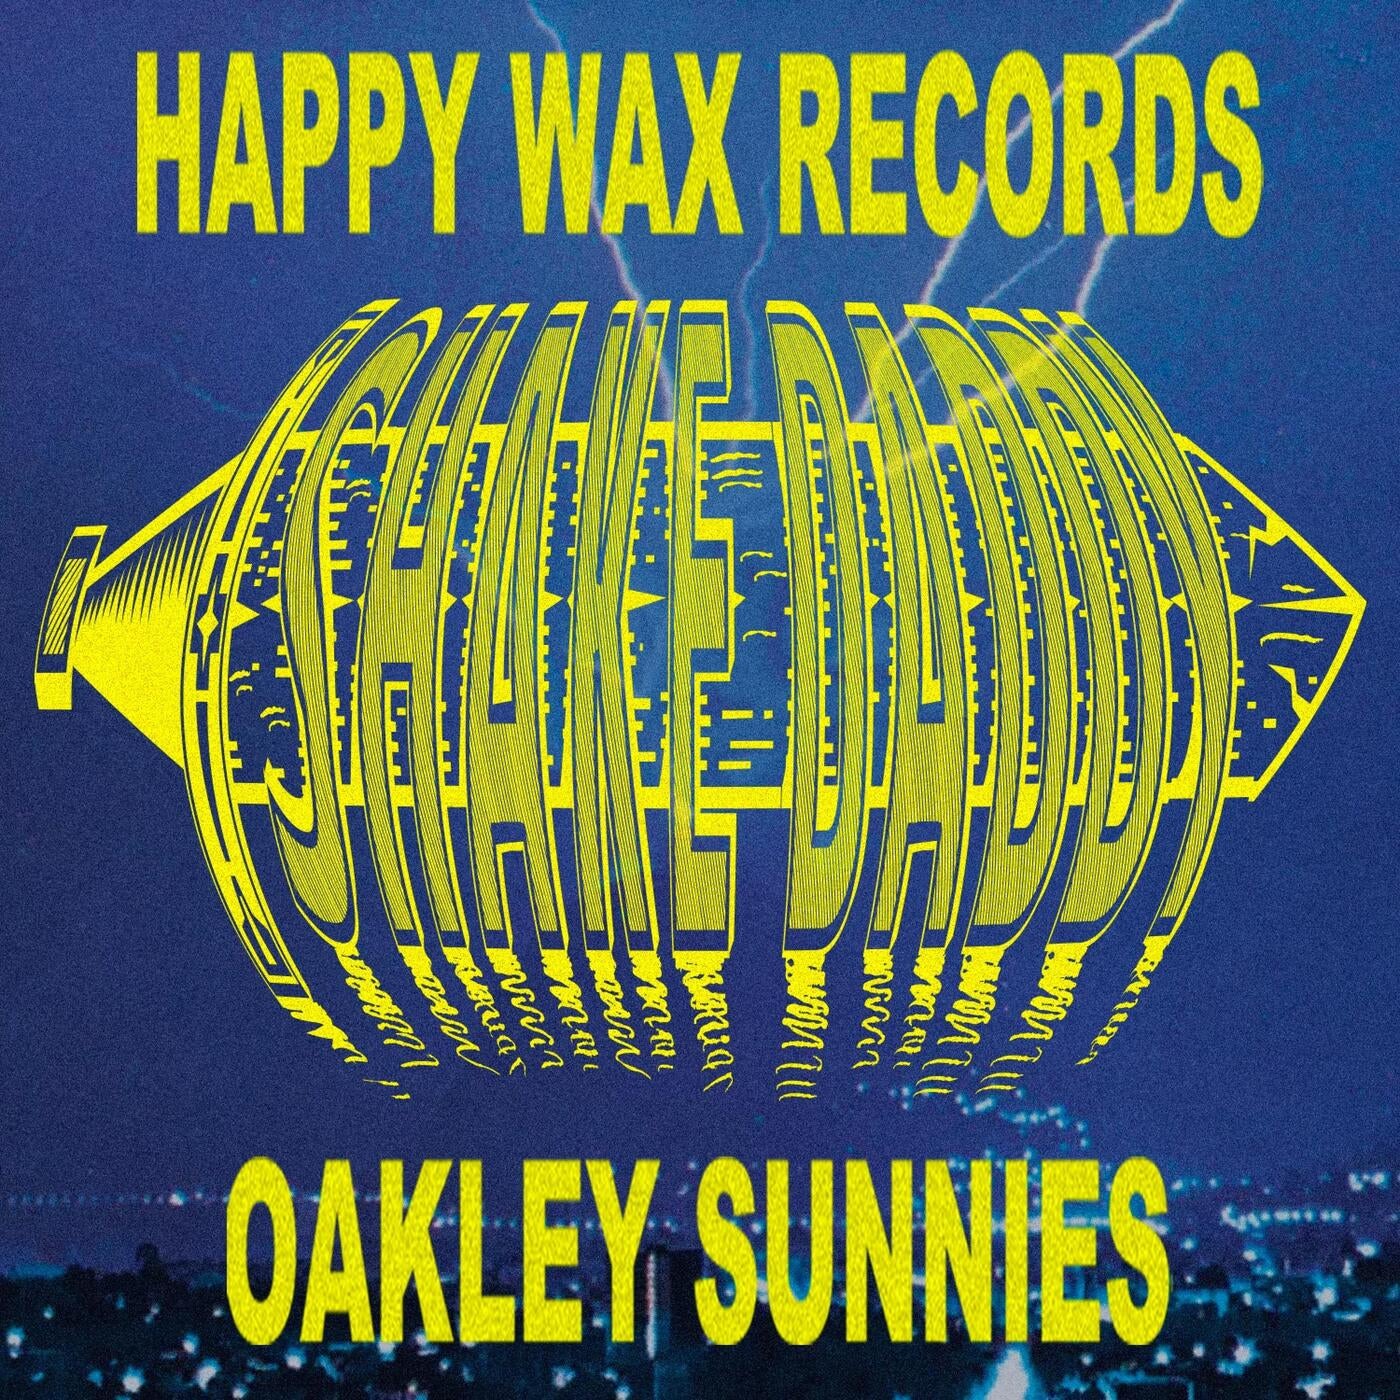 OAKLEY SUNNIES (Original Mix) by Shake Daddy on Beatport